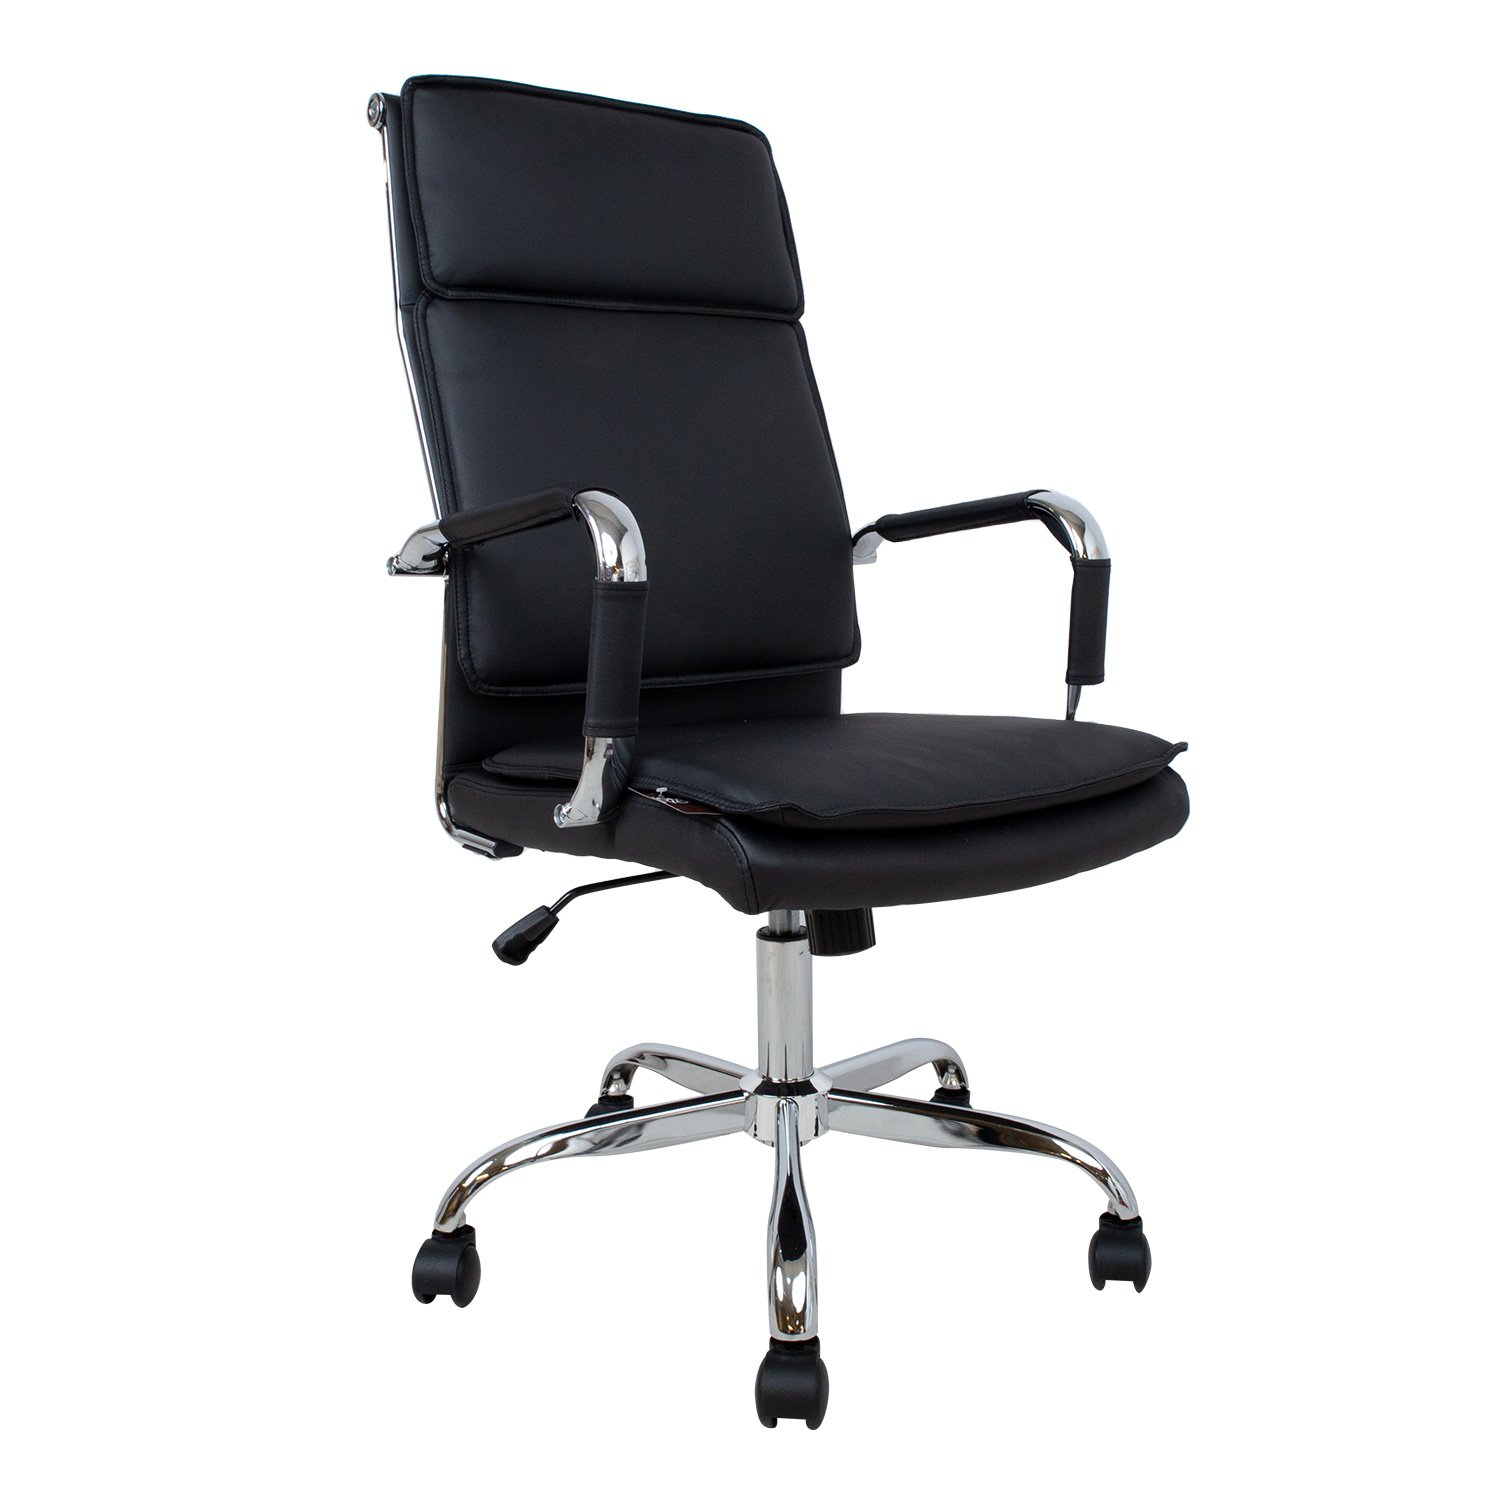 Biuro kėdė ULTRA, 54,5x60xH106,5-116,5 cm, juoda - 1